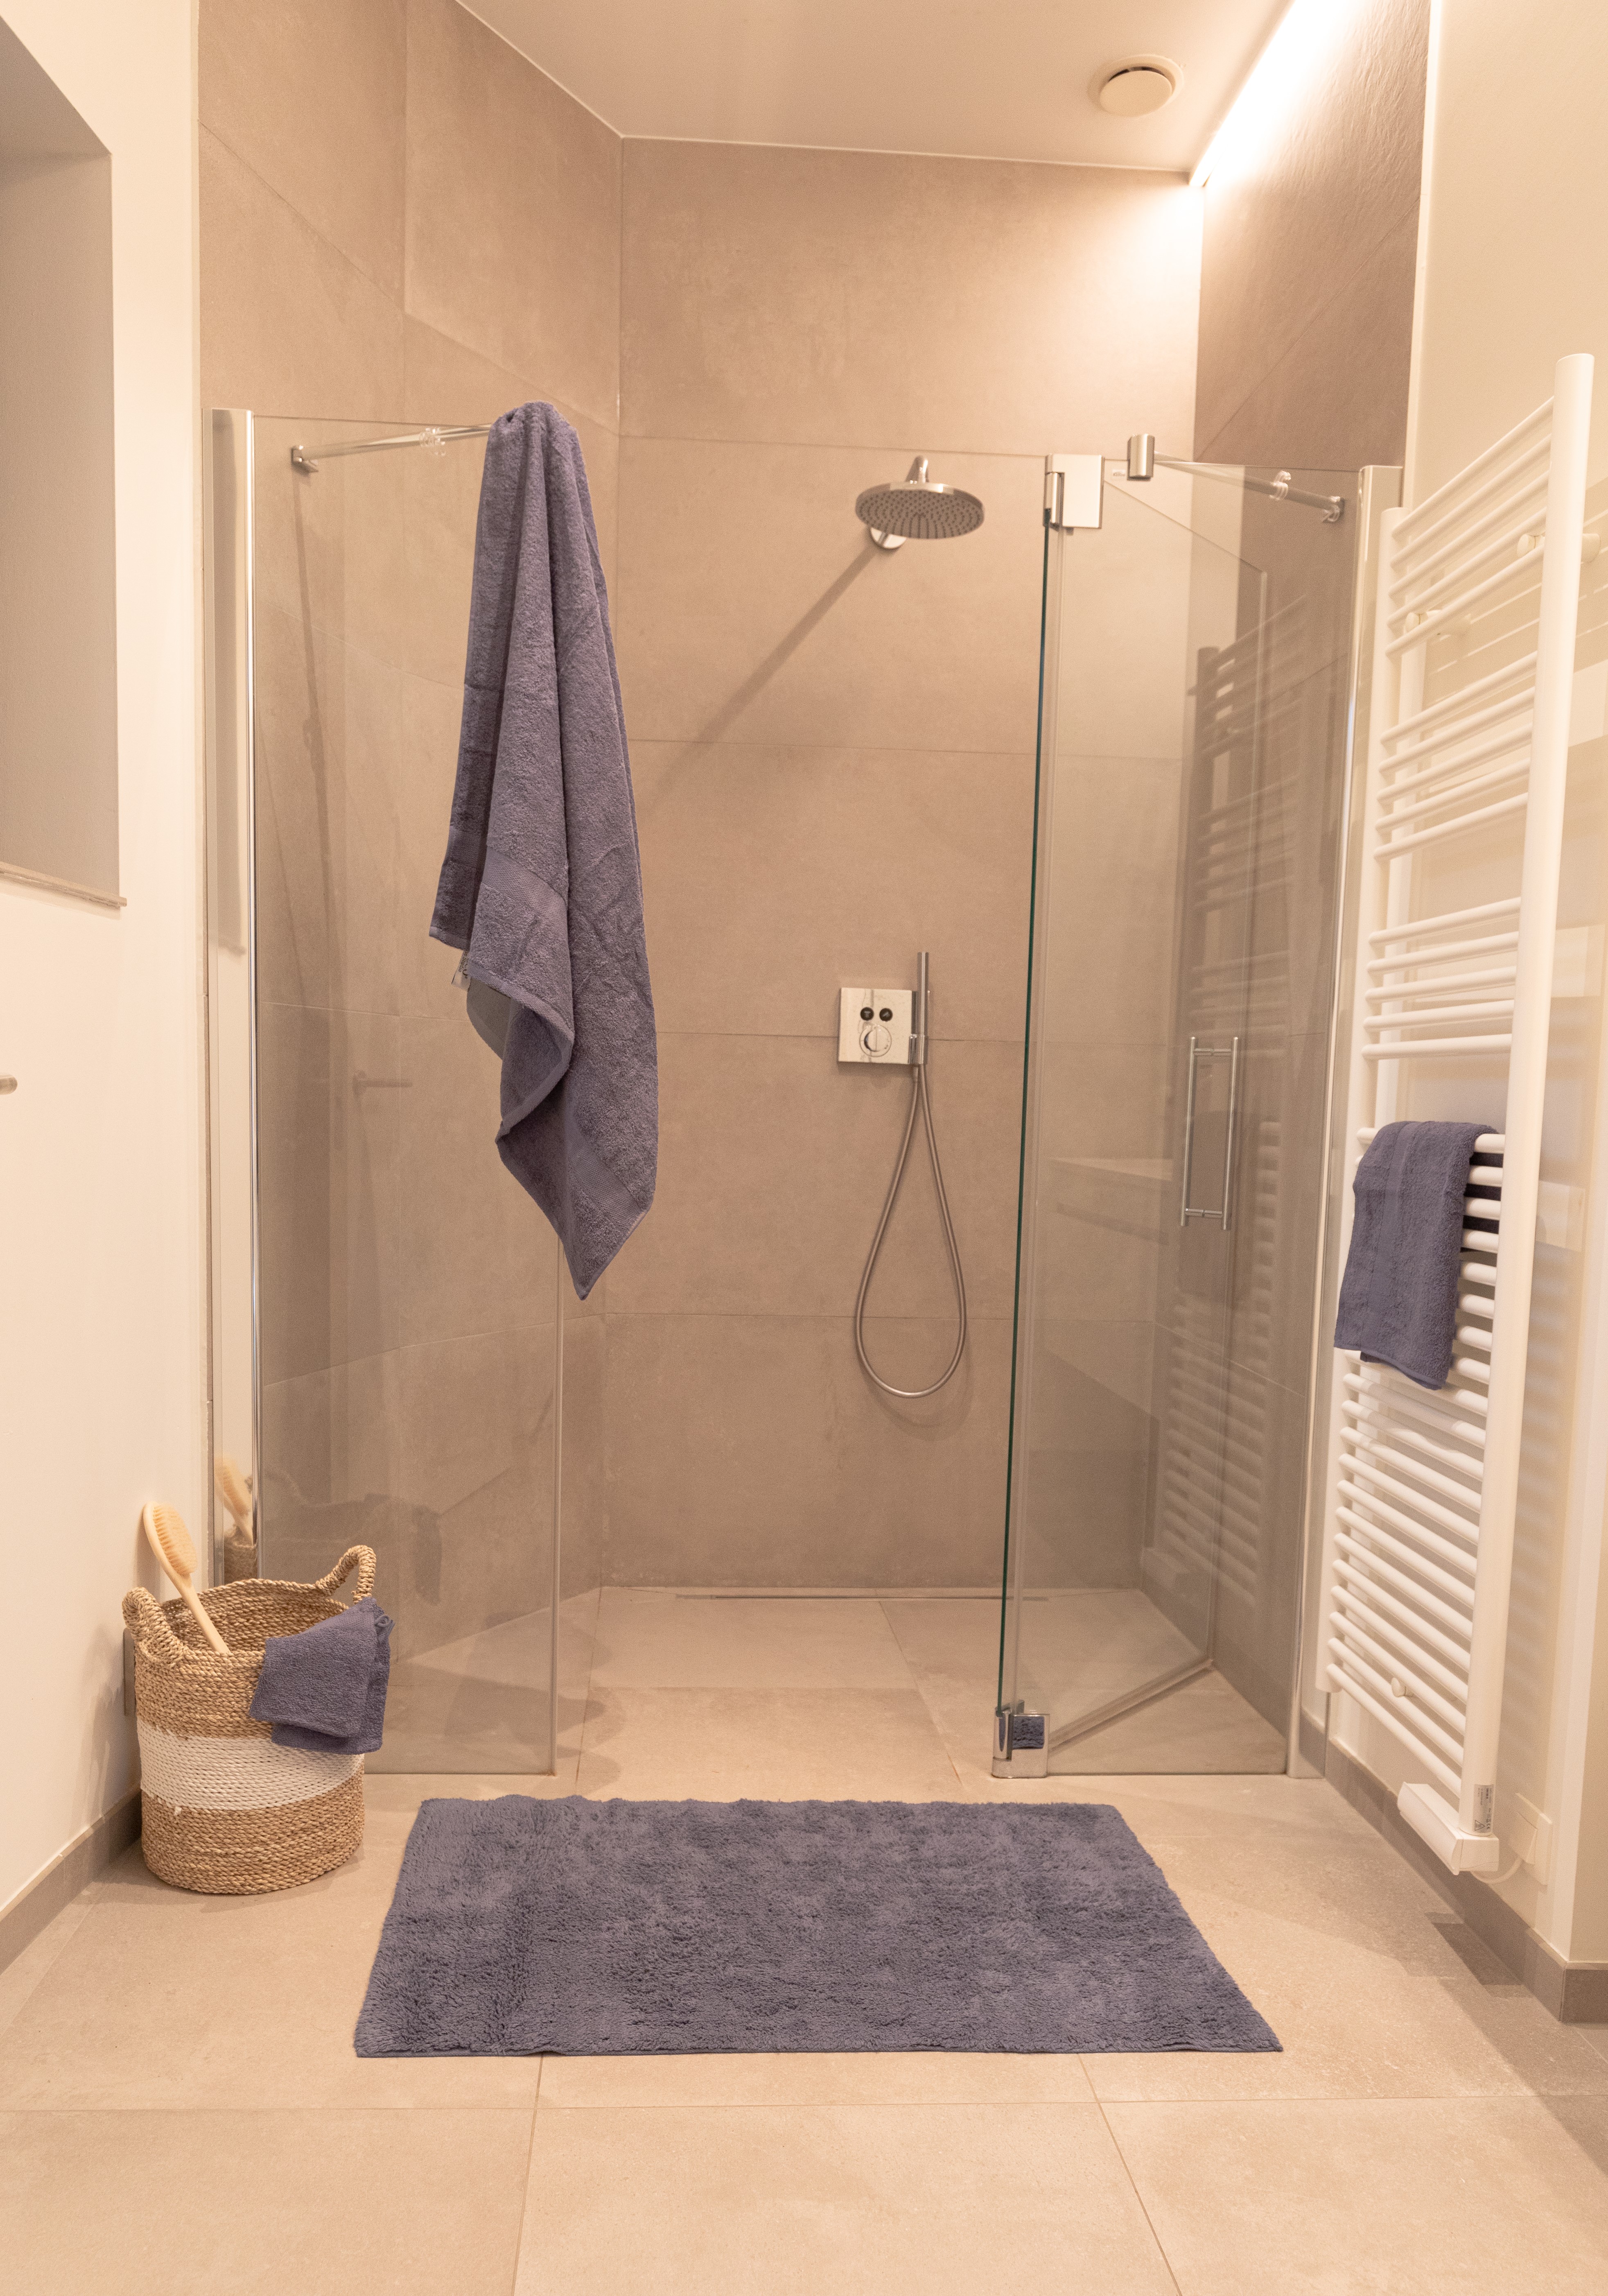 Shower towel 100x150cm, stone blue